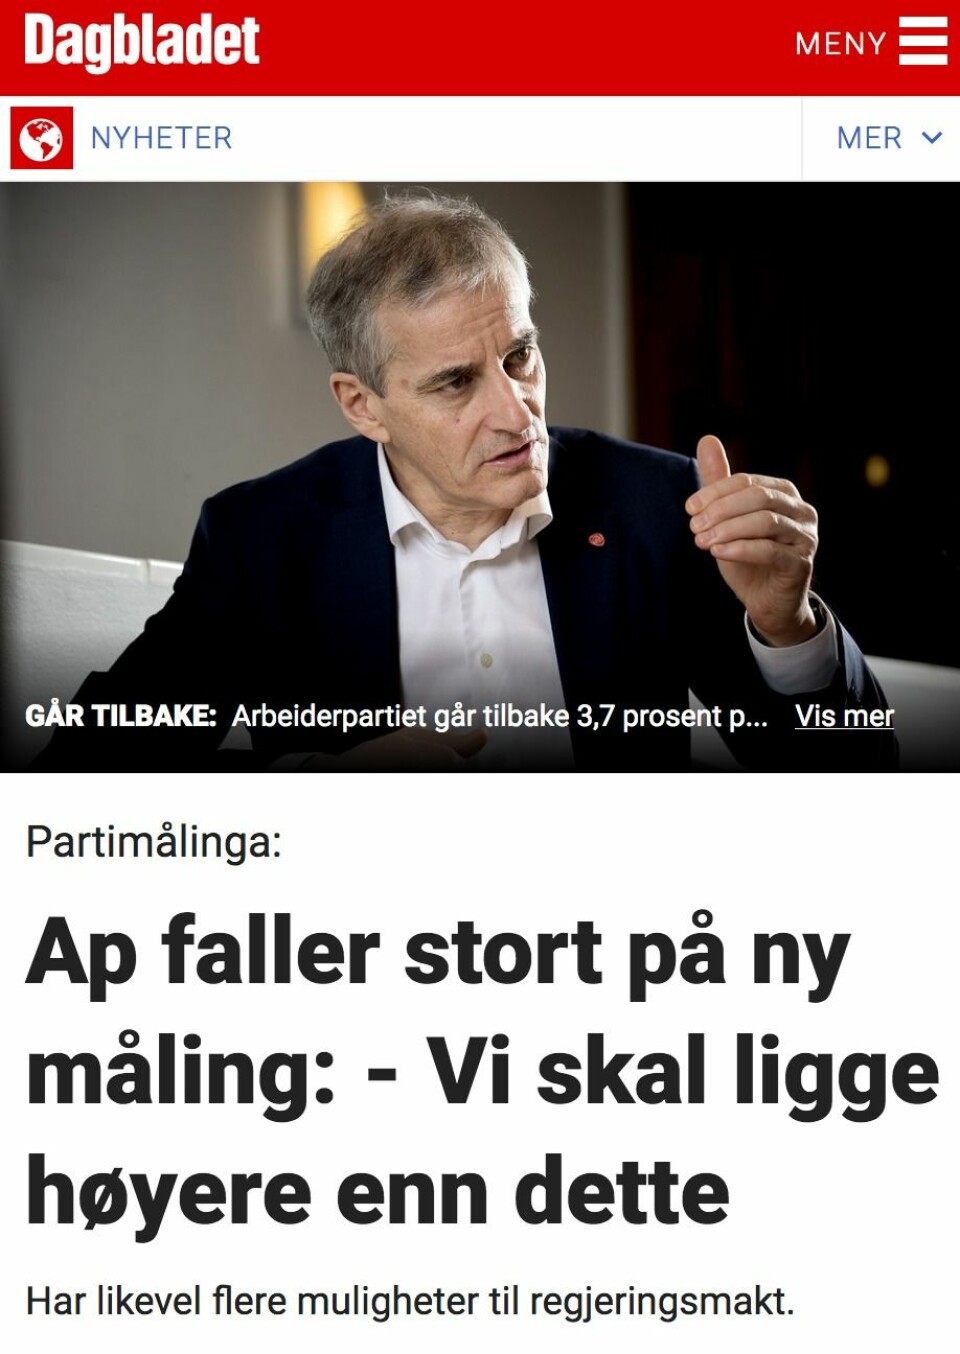 Slik vinklet Dagbladet sin sak.